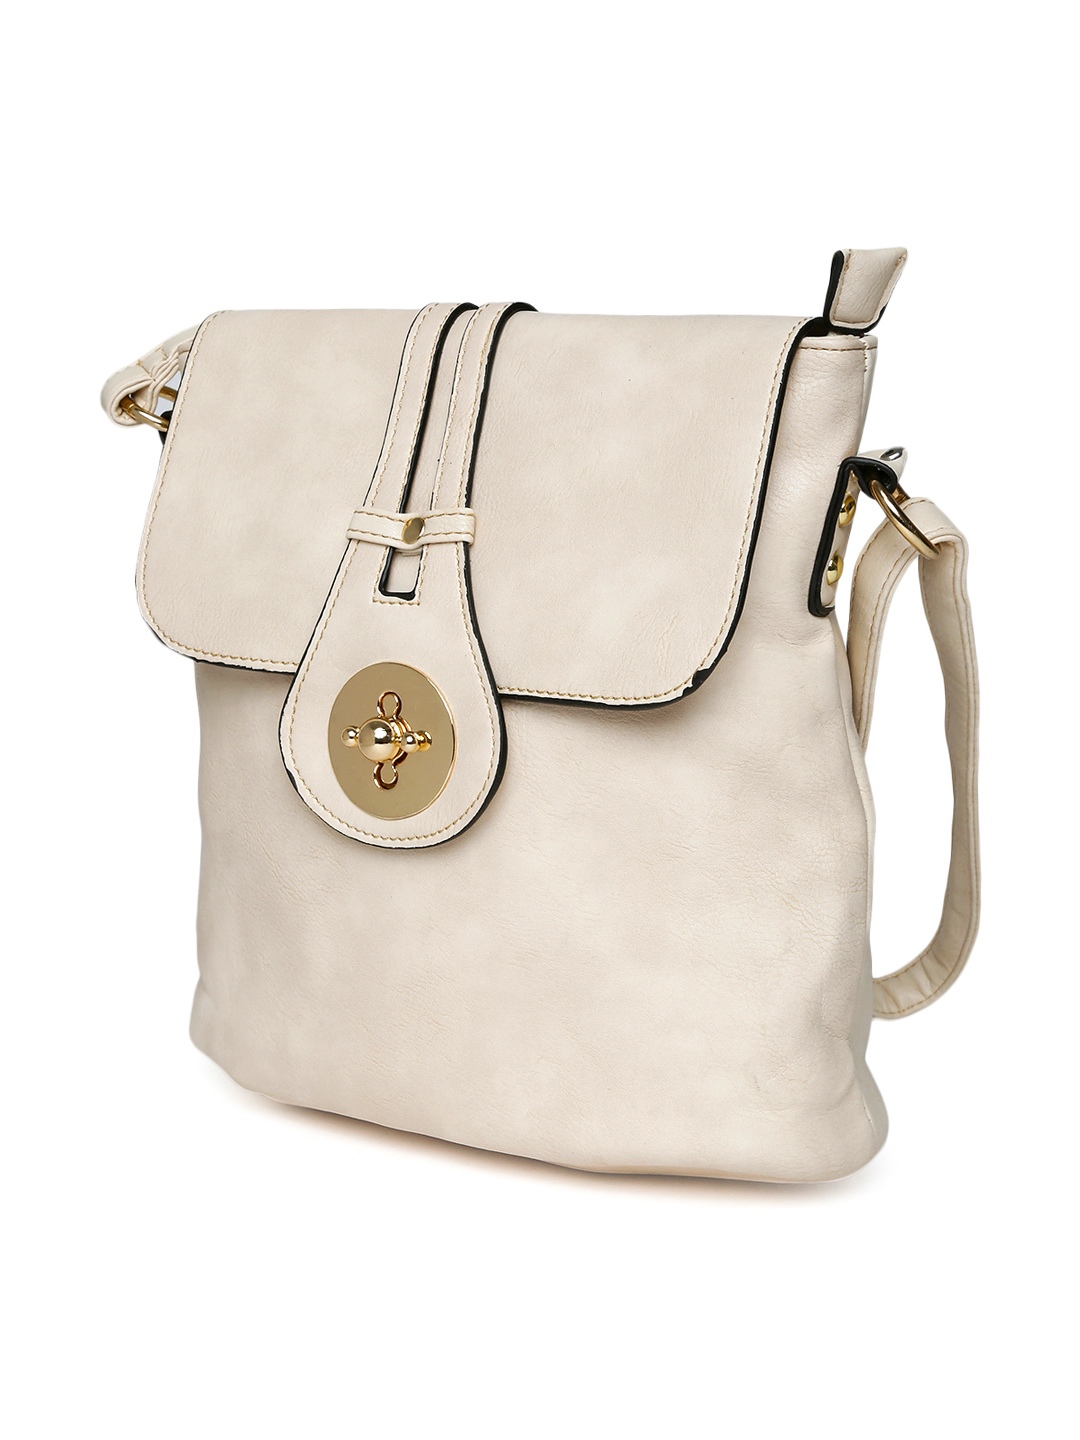 Myntra Ananta Off-White Sling Bag 742882 | Buy Myntra Ananta Handbags at best price online. All ...